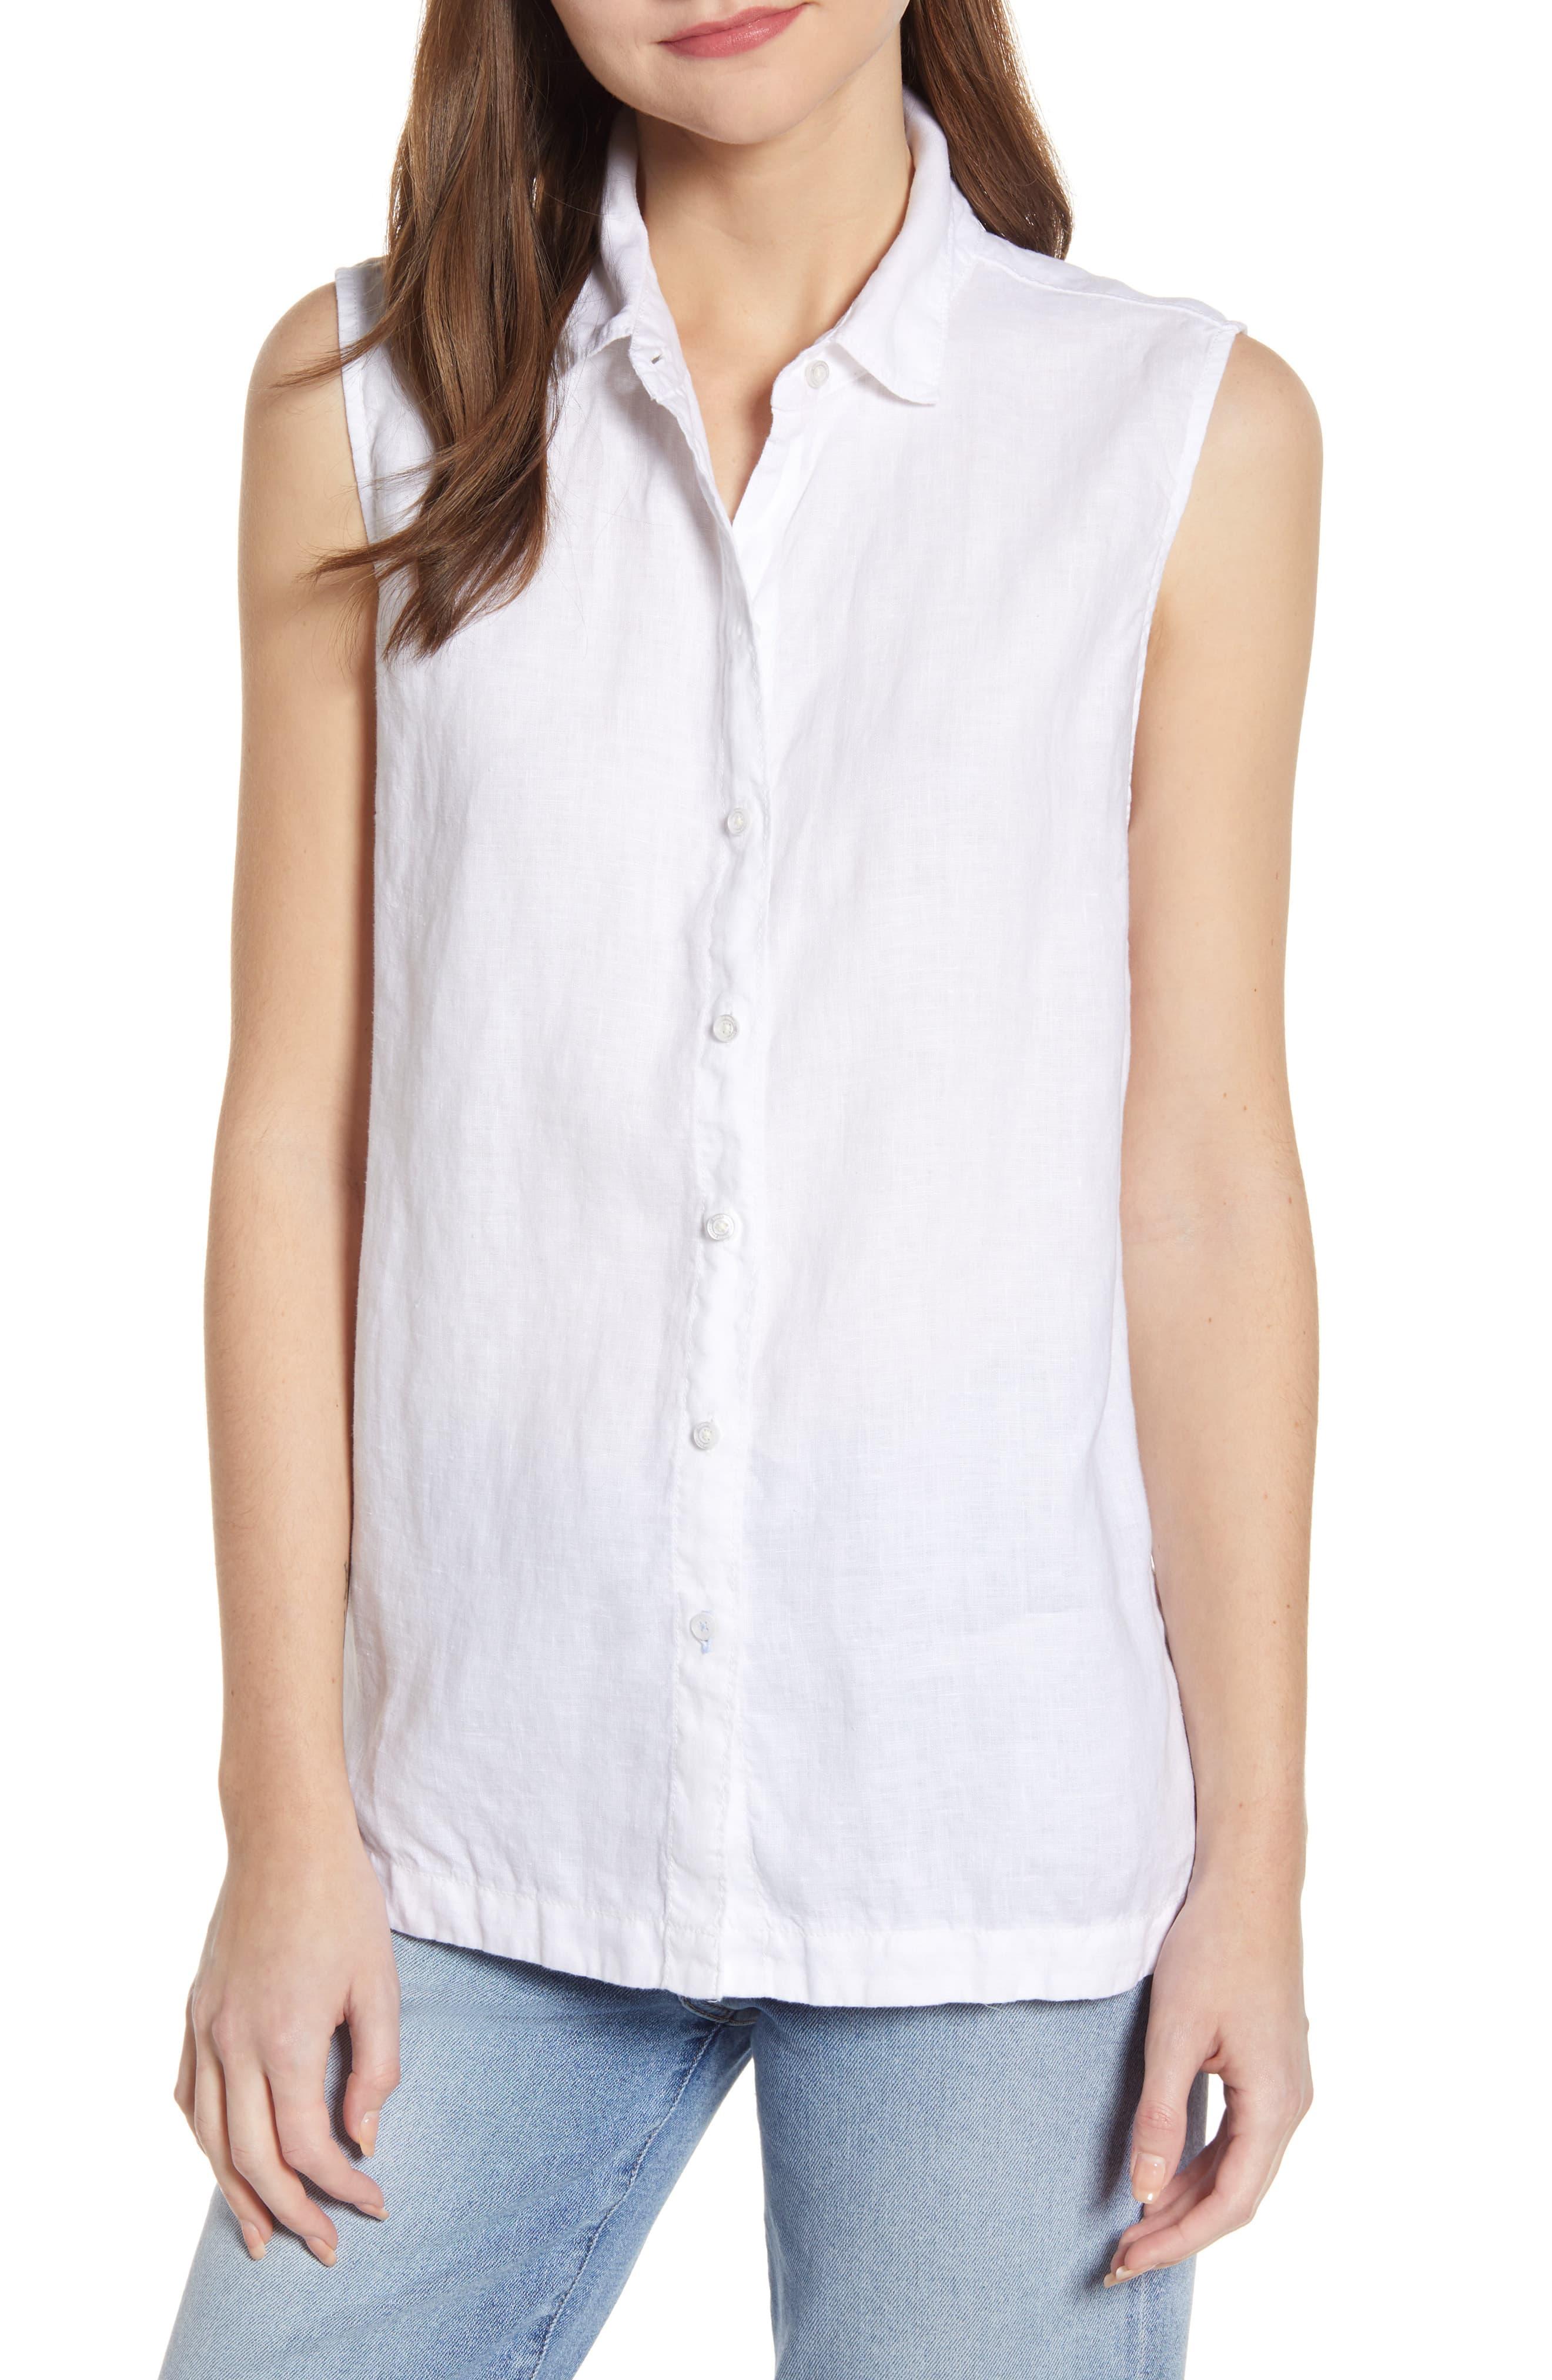 Tommy Bahama New Sea Glass Breezer Sleeveless Linen Shirt in White - Lyst